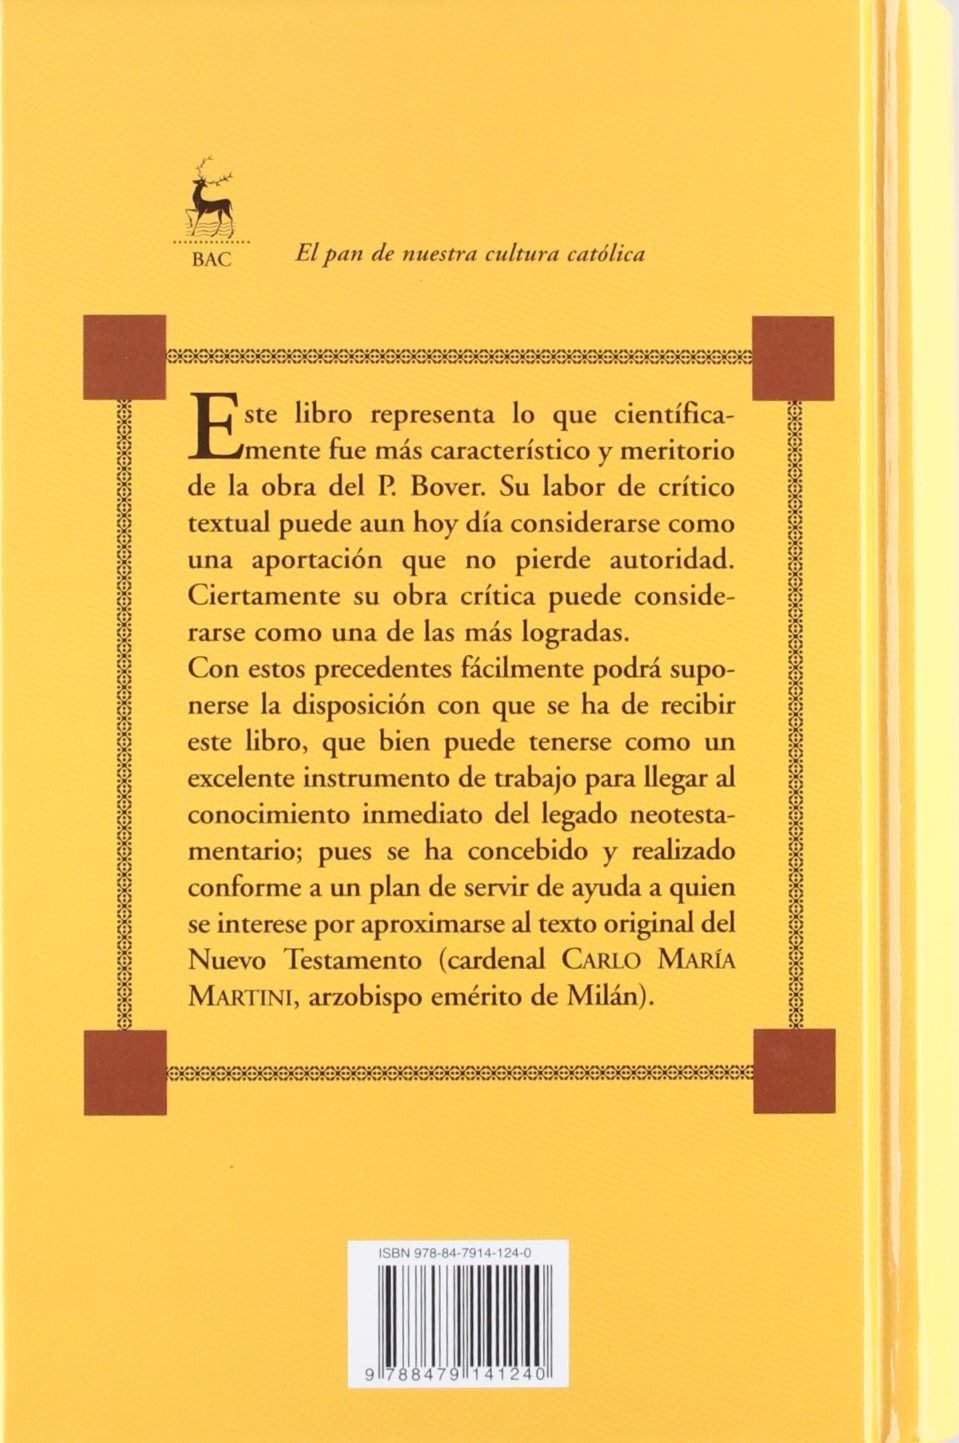 Nuevo Testamento Trilingüe  (Español, Latín, Griego)